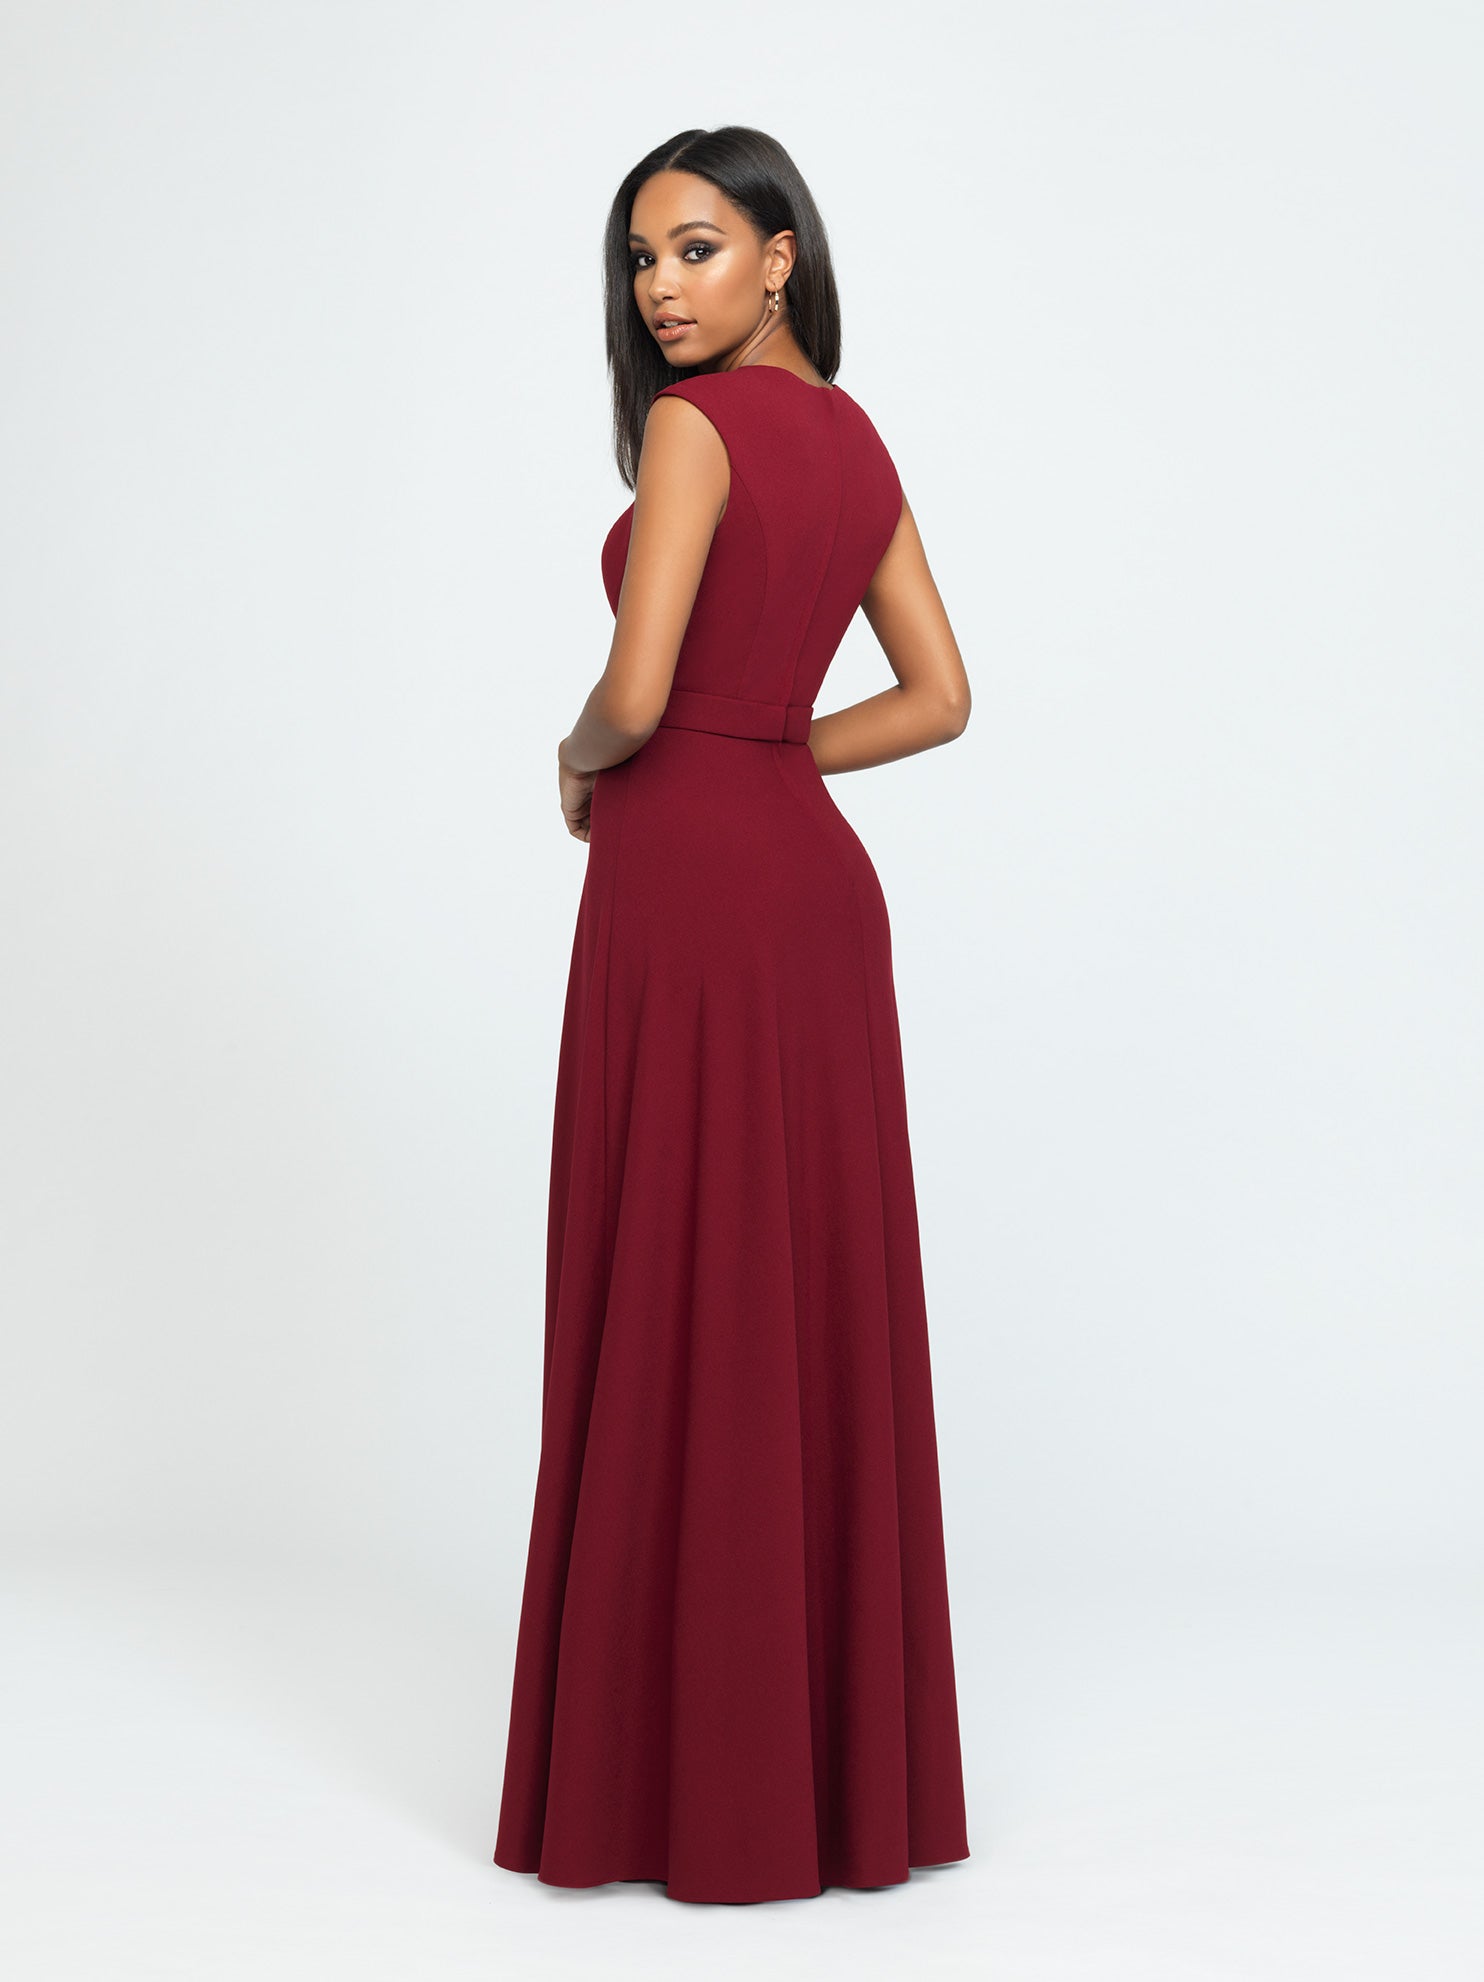 Burgundy Cap Sleeve A-Line Dress